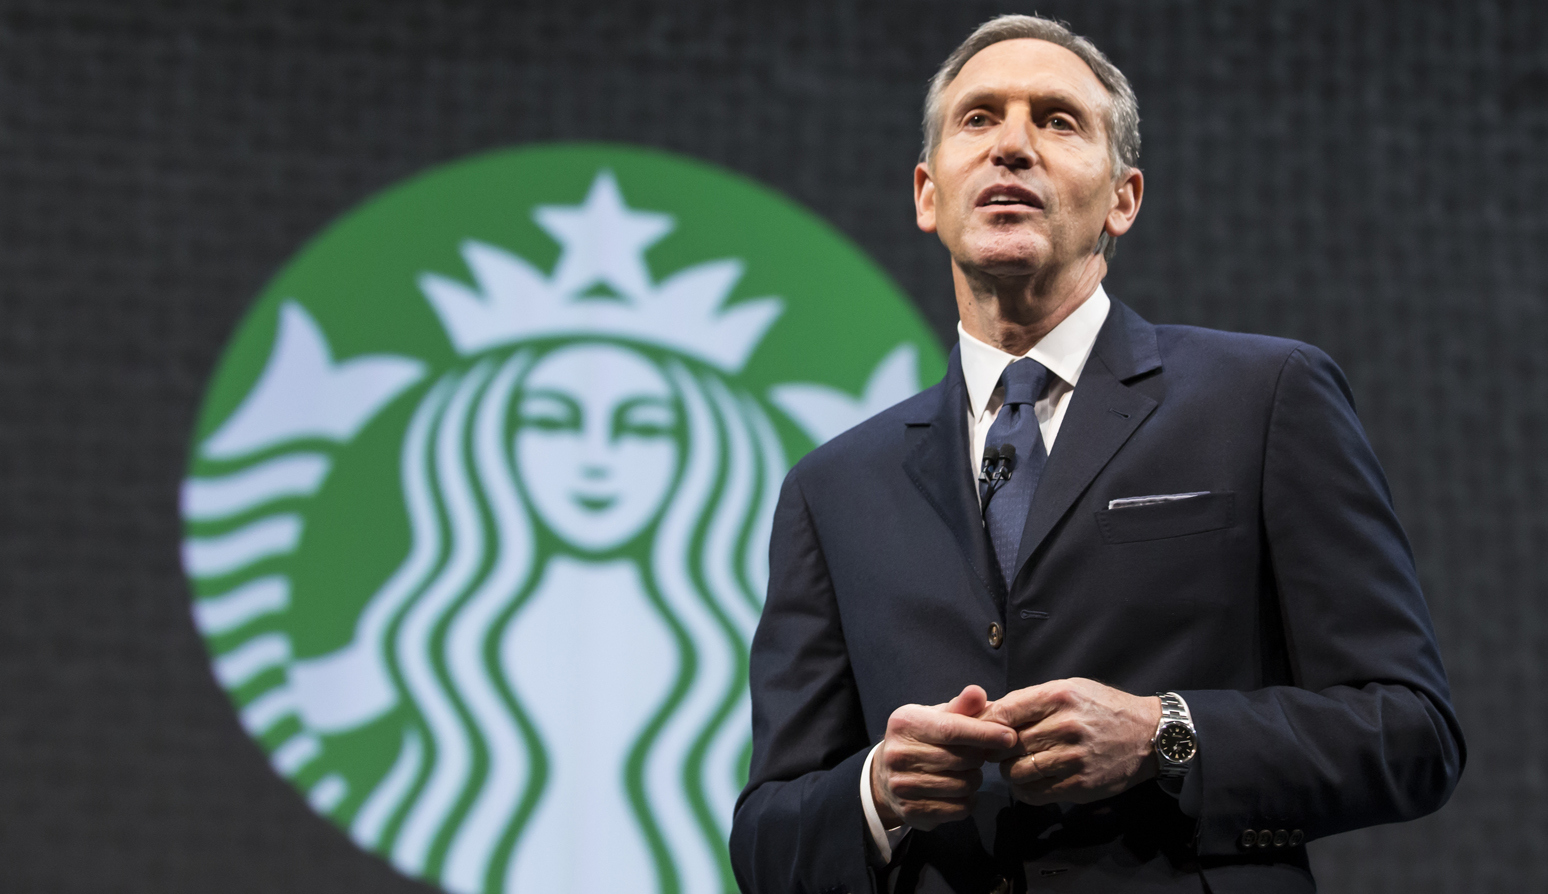 Starbucks Chairman and CEO Howard Schultz. (Stephen Brashear&mdash;Getty Images)